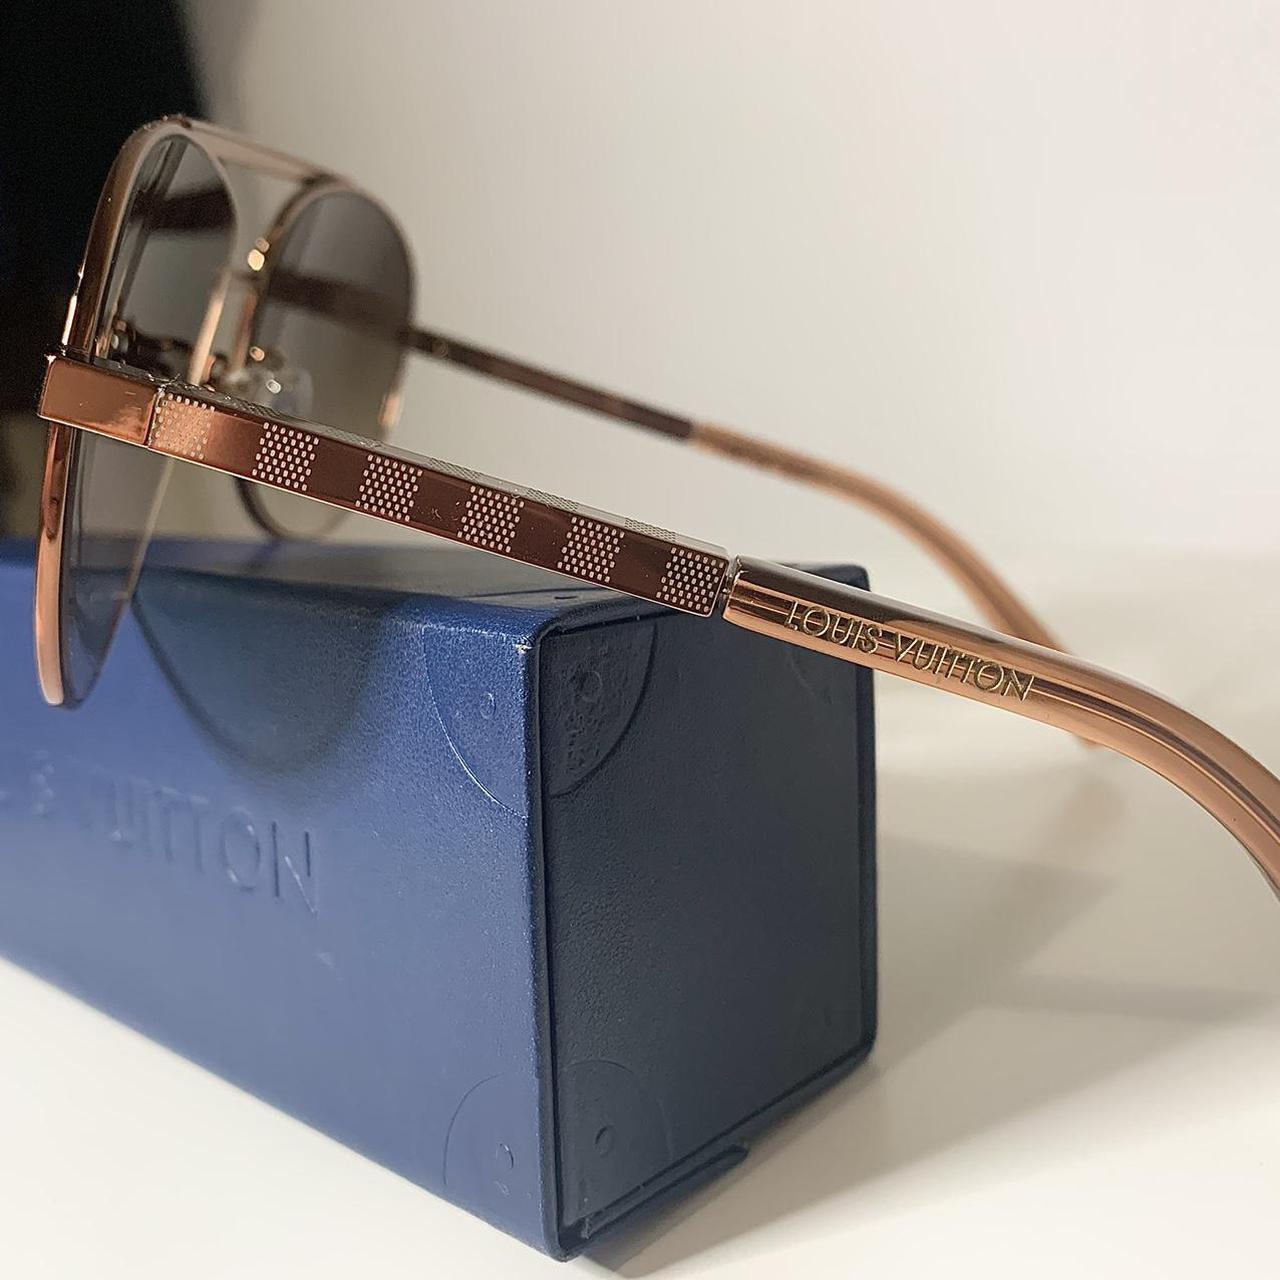 Louis Vuitton attitude sunglasses - Depop